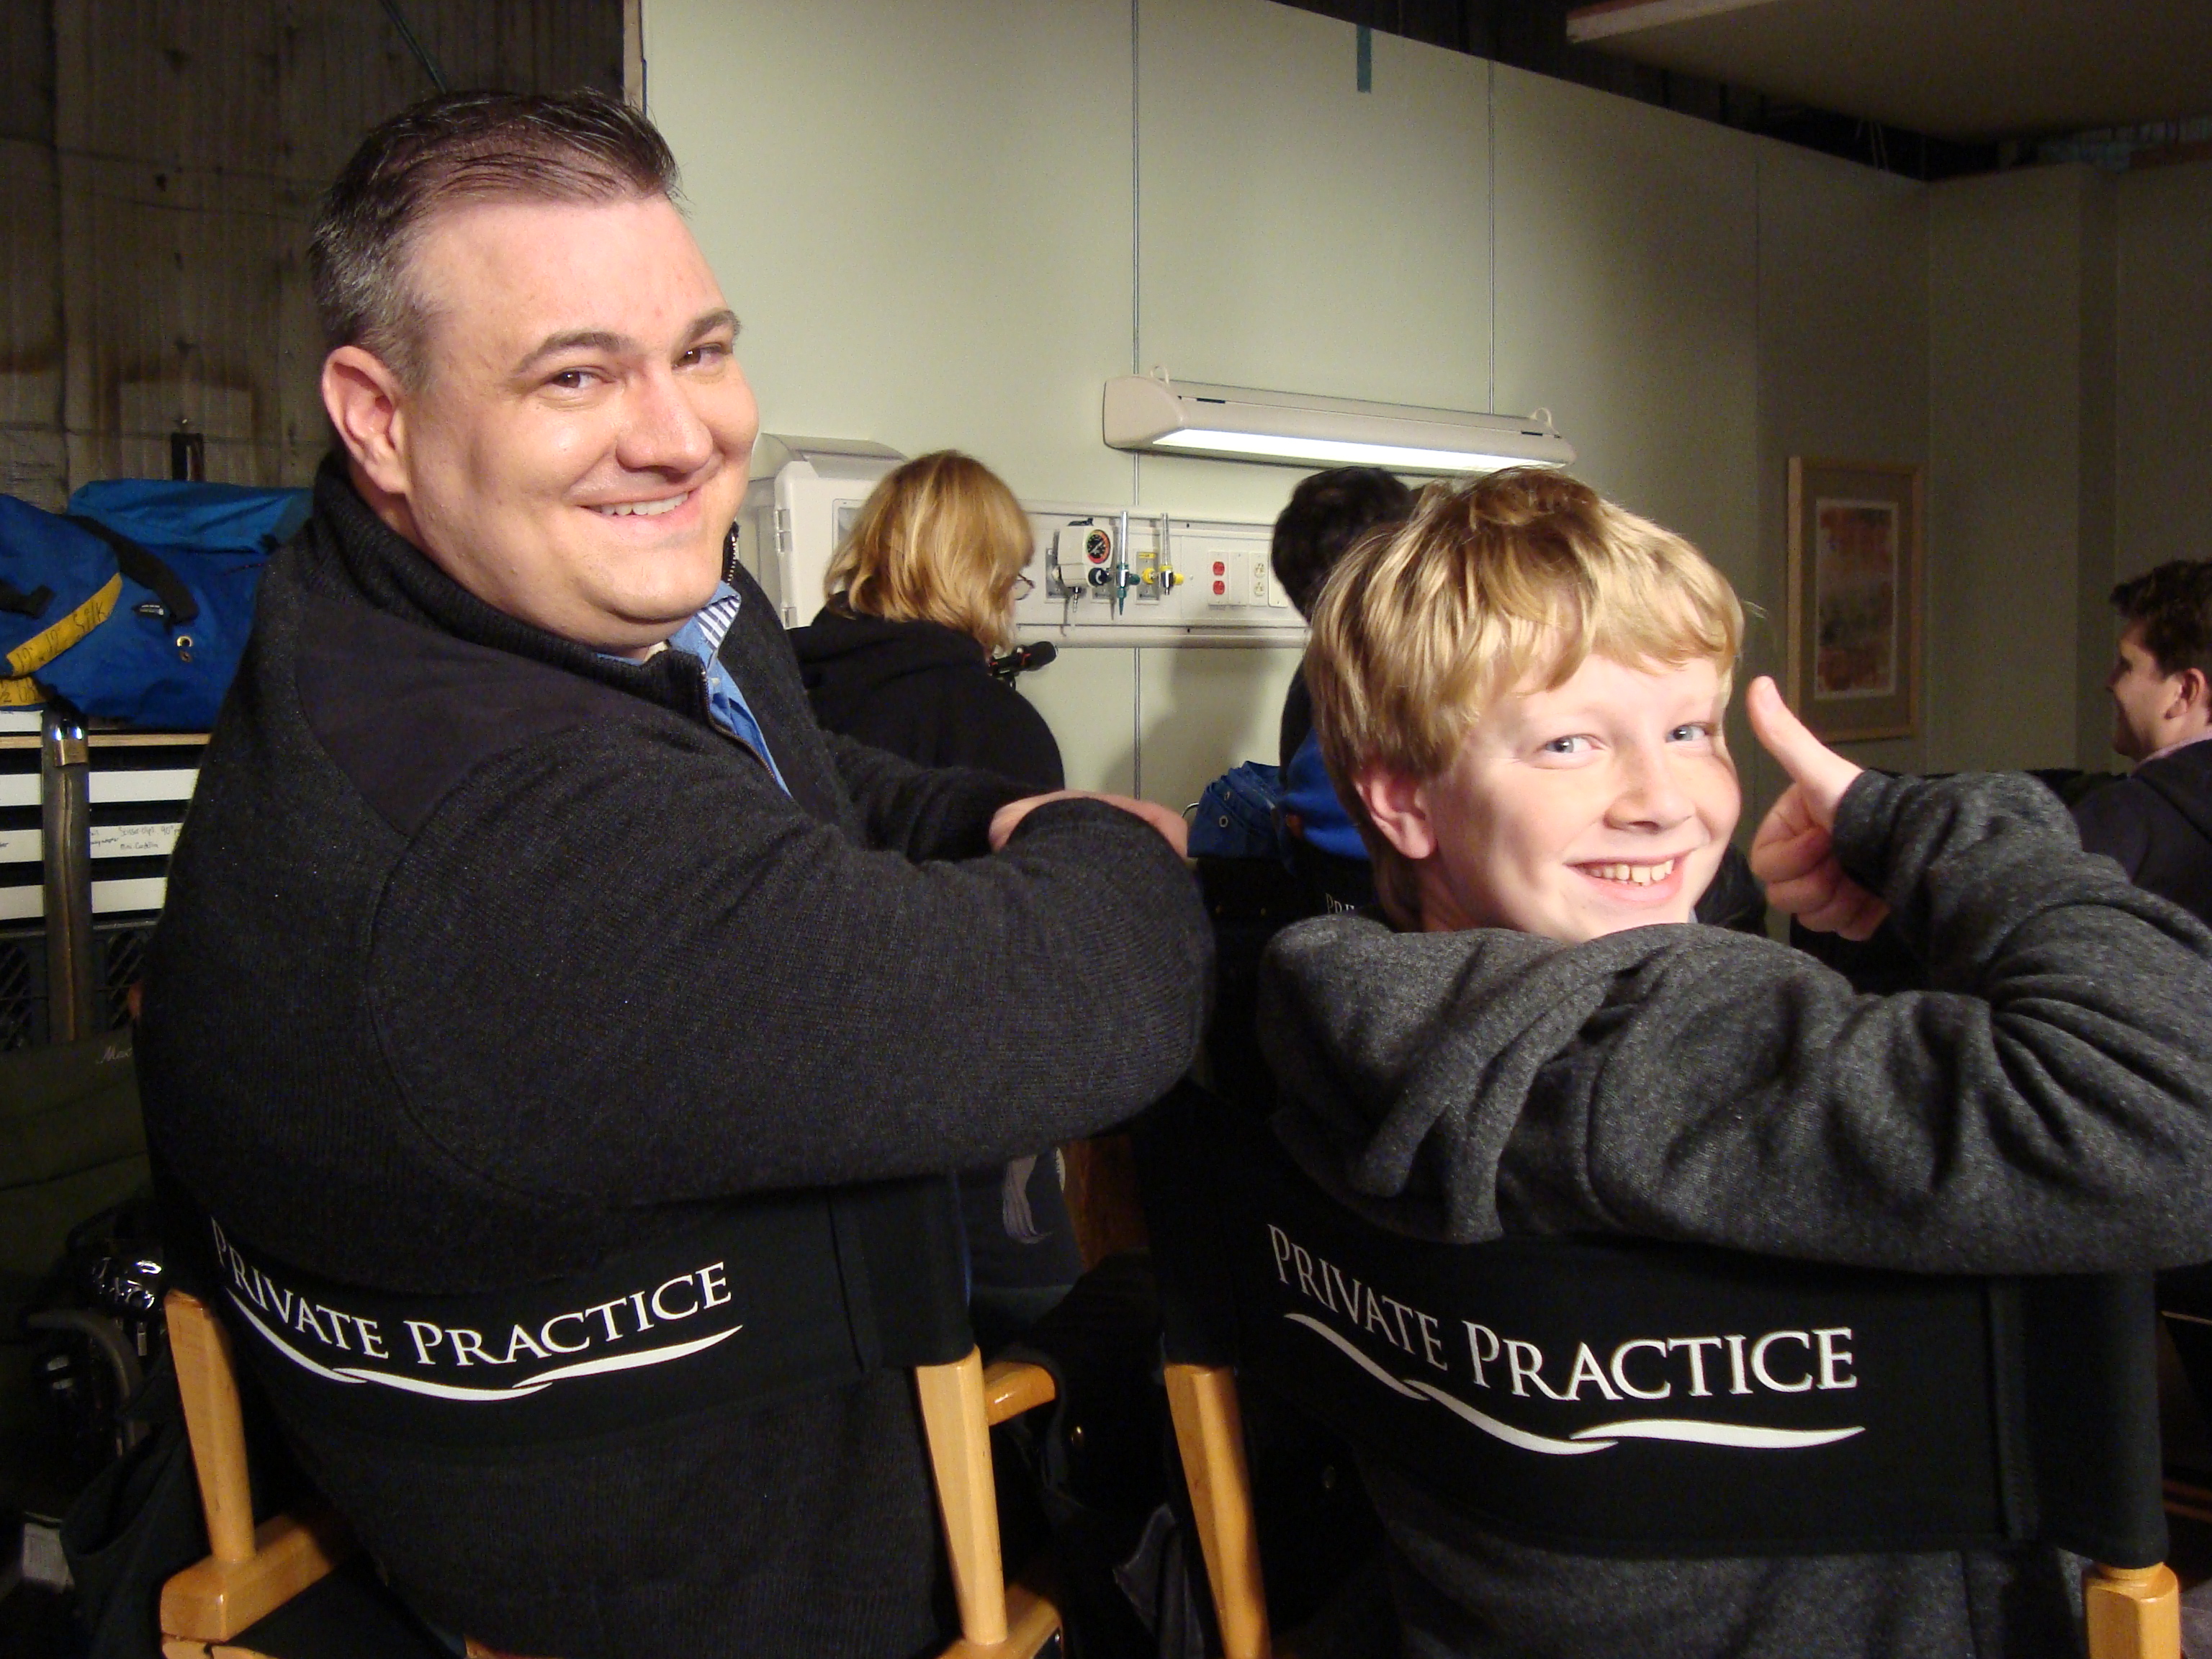 Joseph & Michael Patrick McGill on the ABC Private Practice set.